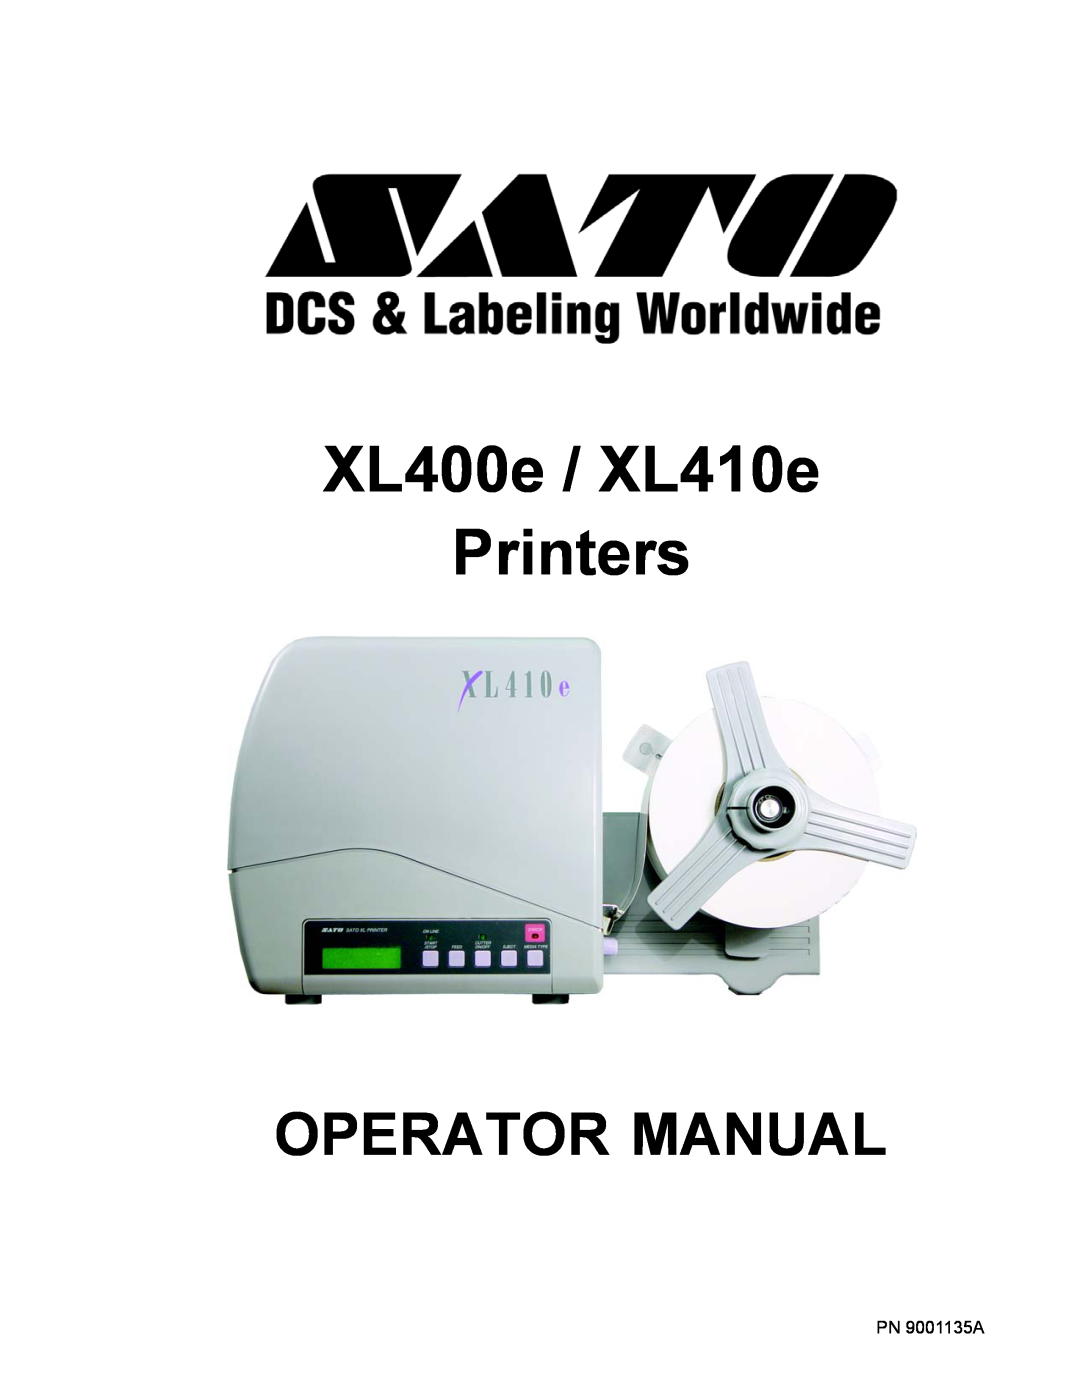 SATO manual XL400e / XL410e Printers, Operator Manual 